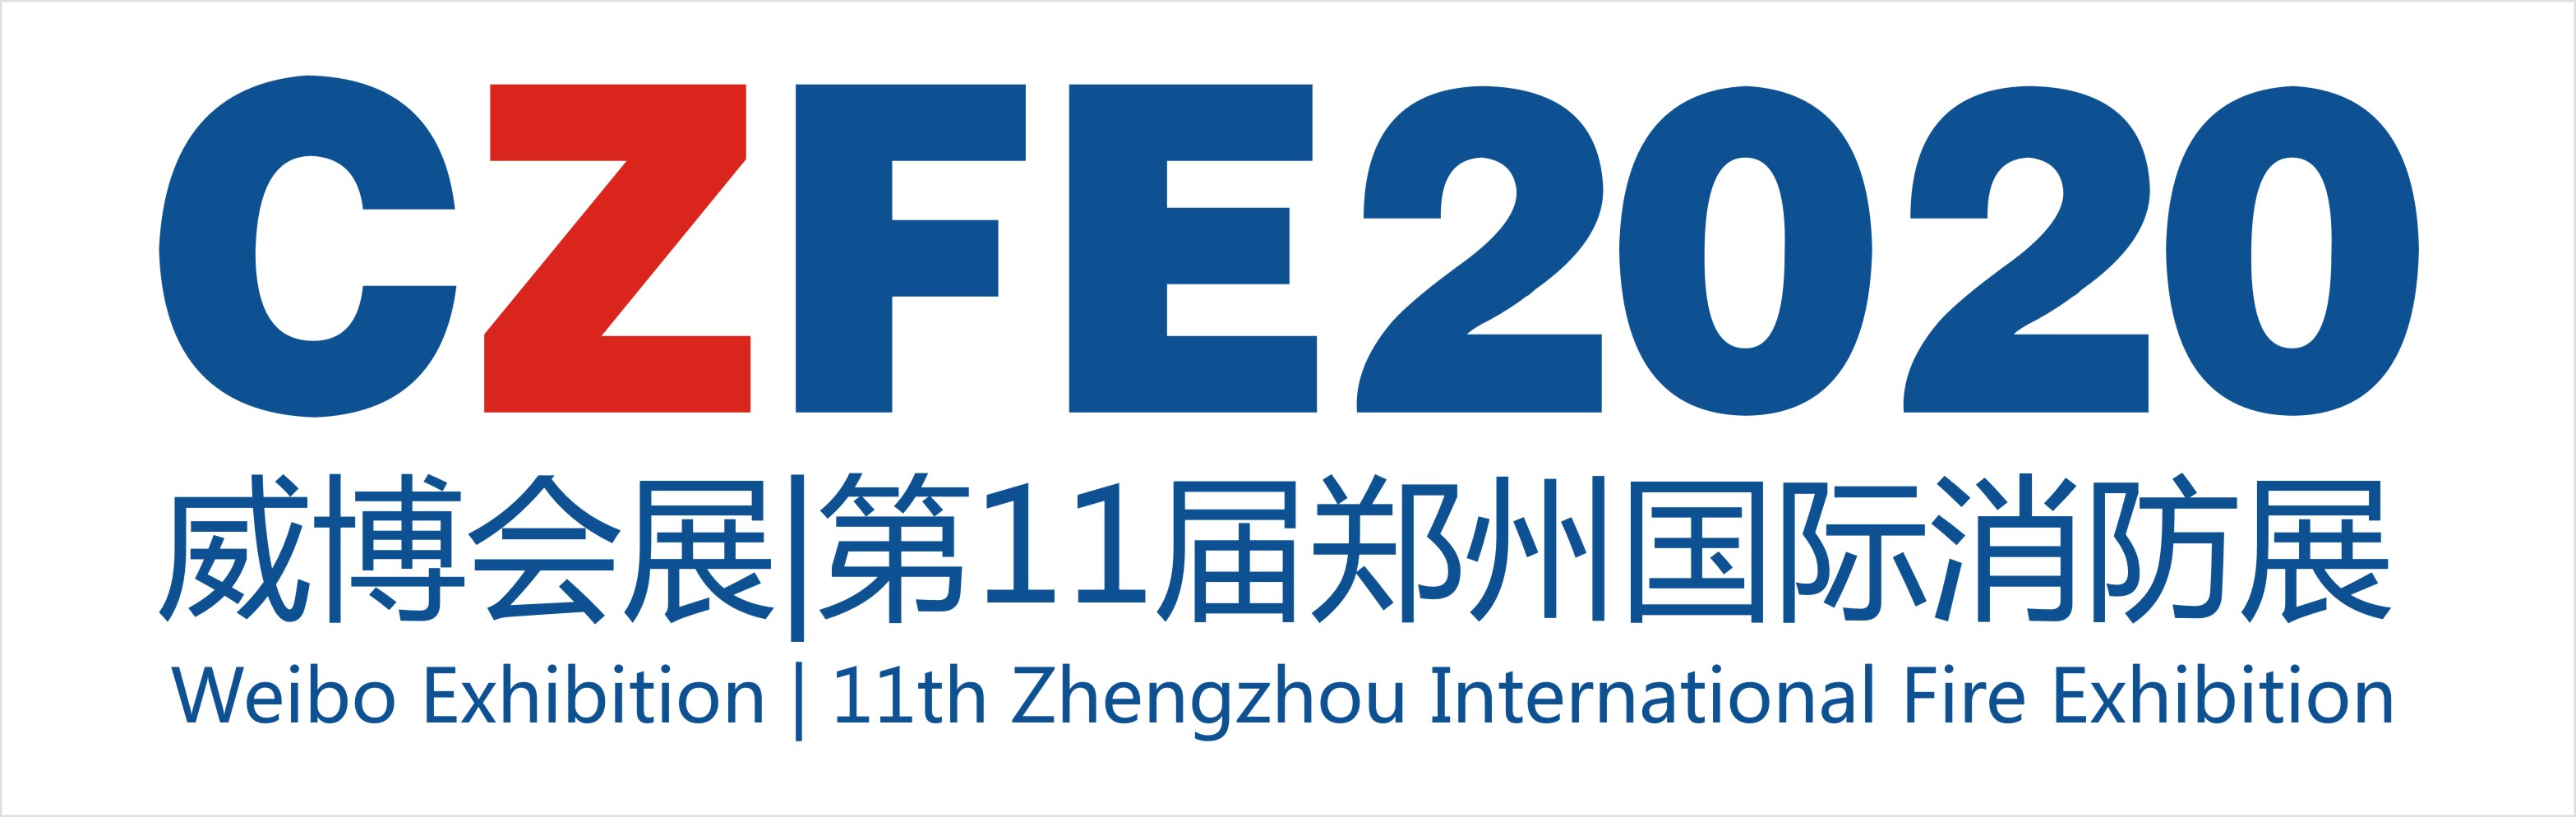 CZFE2020第11届郑州国际消防展【官网】